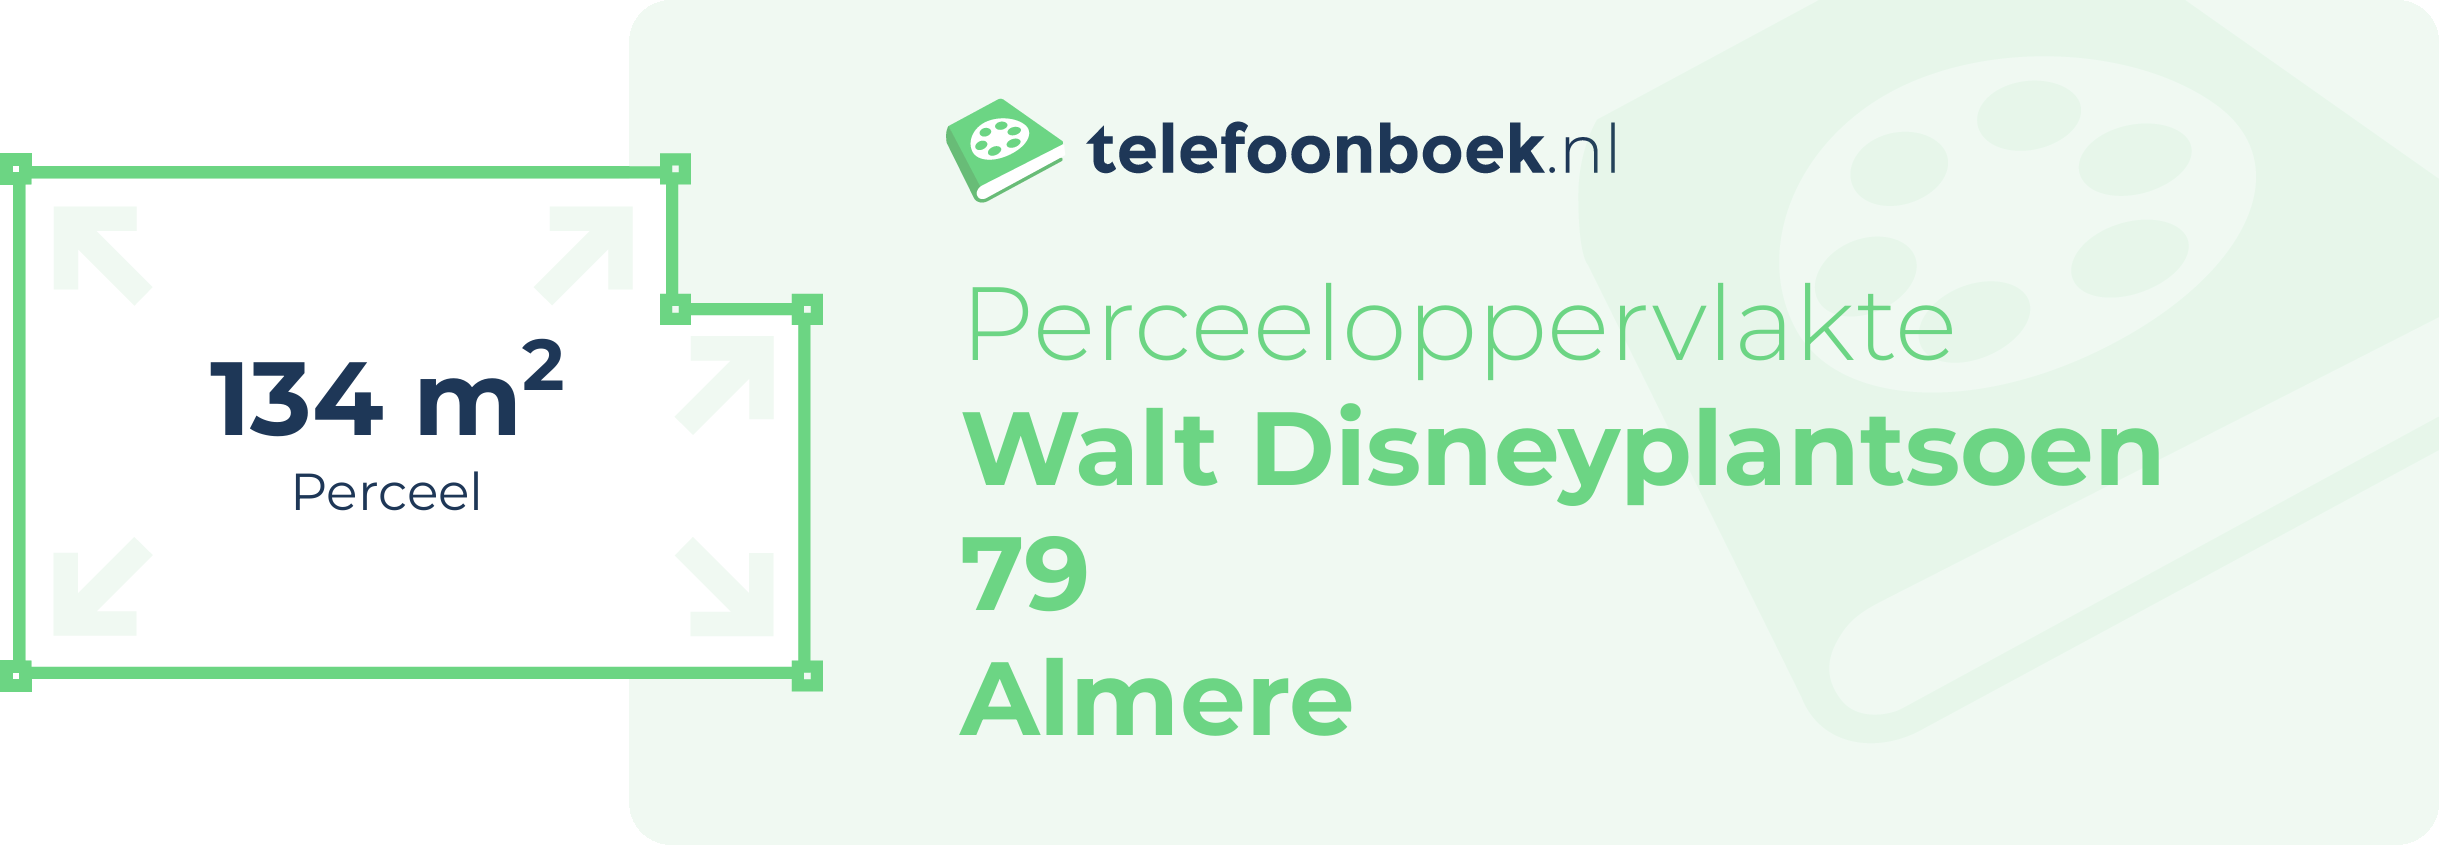 Perceeloppervlakte Walt Disneyplantsoen 79 Almere